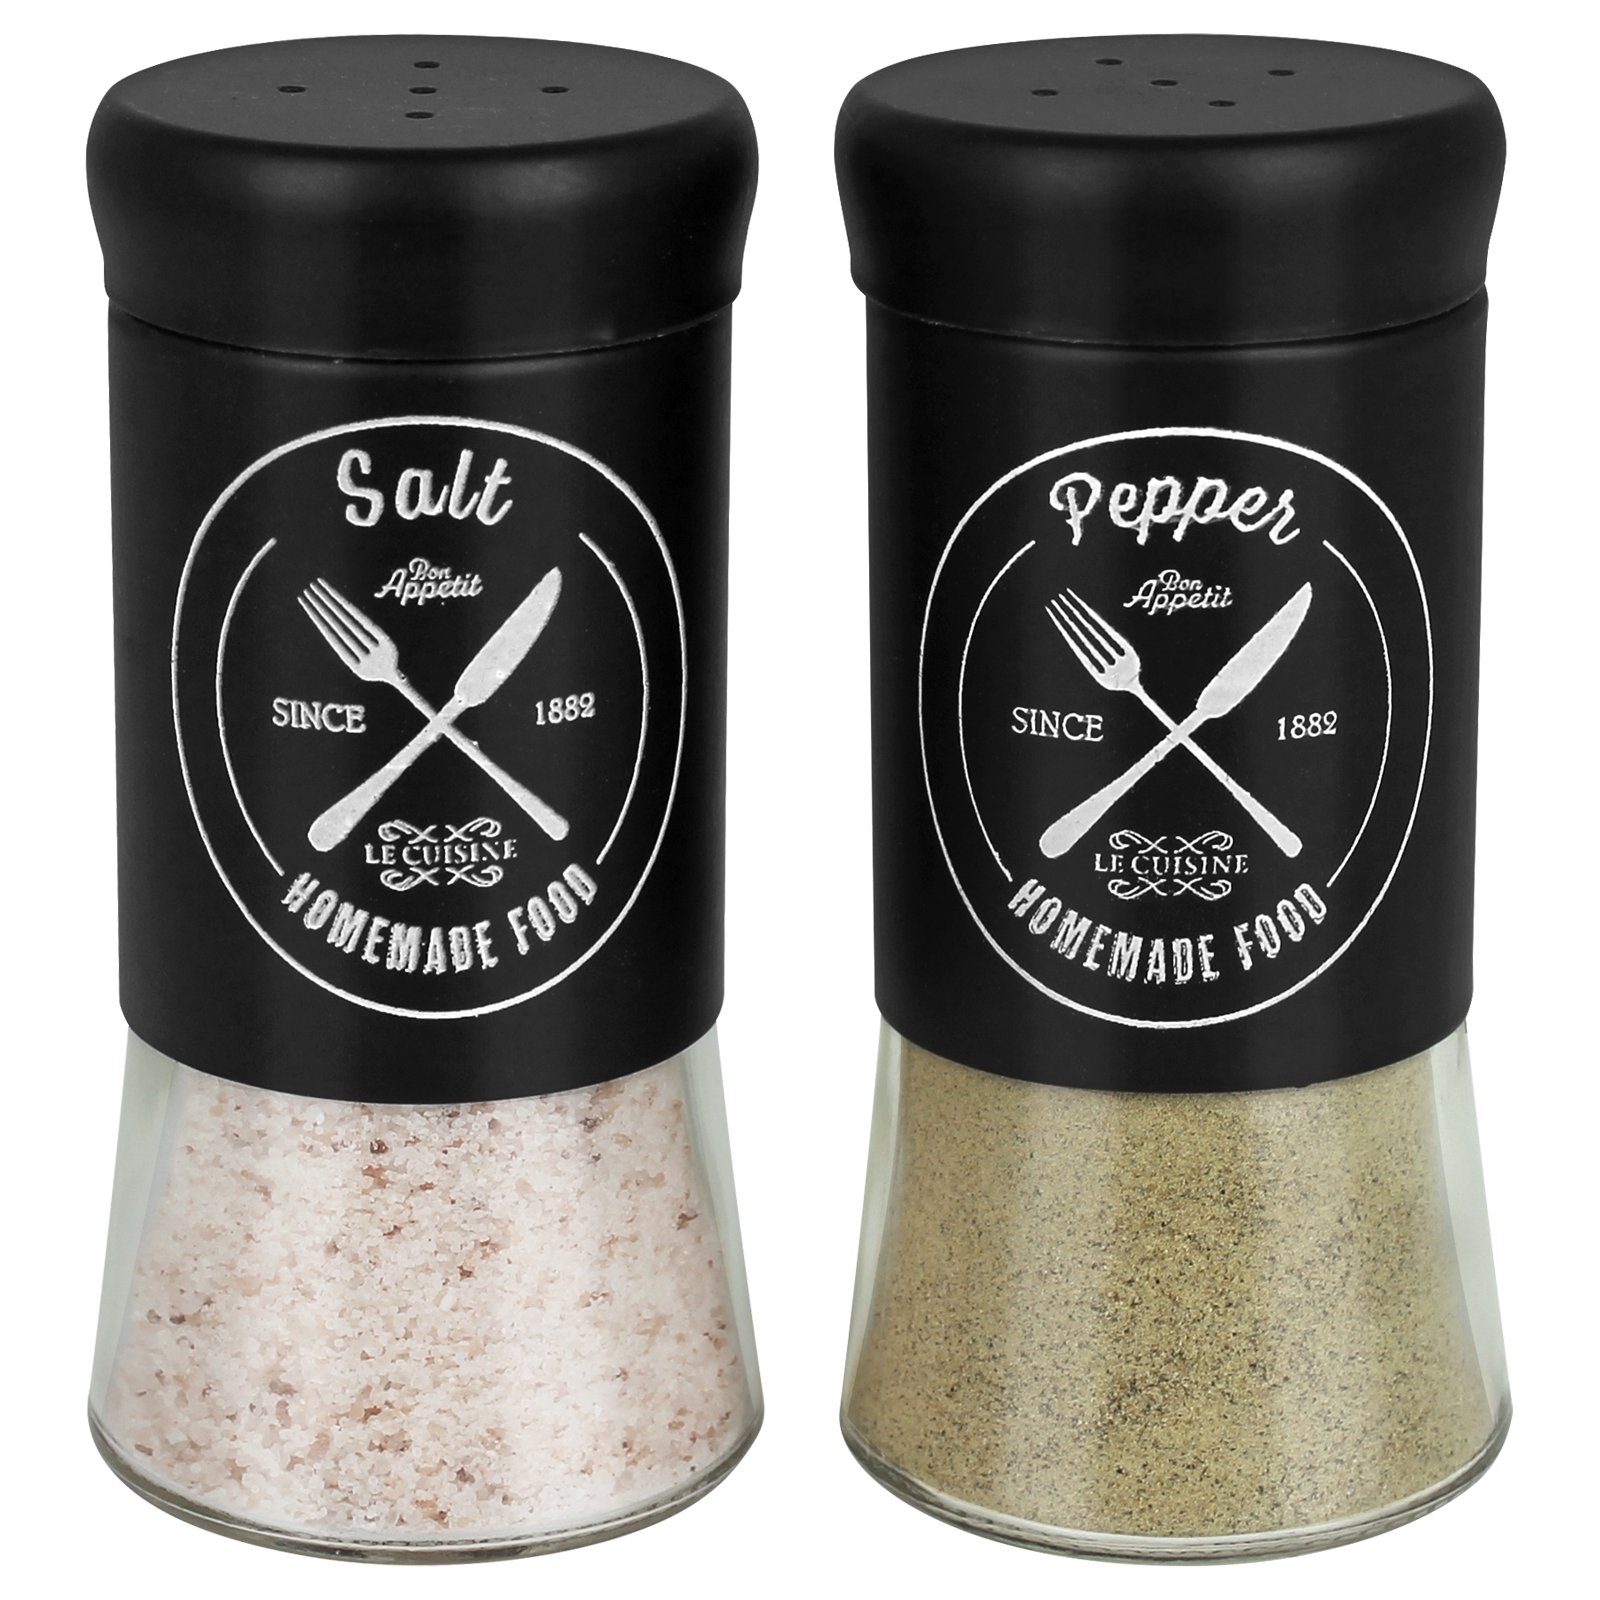 Koopman Salz- / Pfefferstreuer Gewürzstreuer Bistro Salt Pepper Salzstreuer Streuerset Gewürzglas, (Set 2 Stück), Gewürzspender Vintage Gewürz Aufbewahrung Behälter Streuer Glas